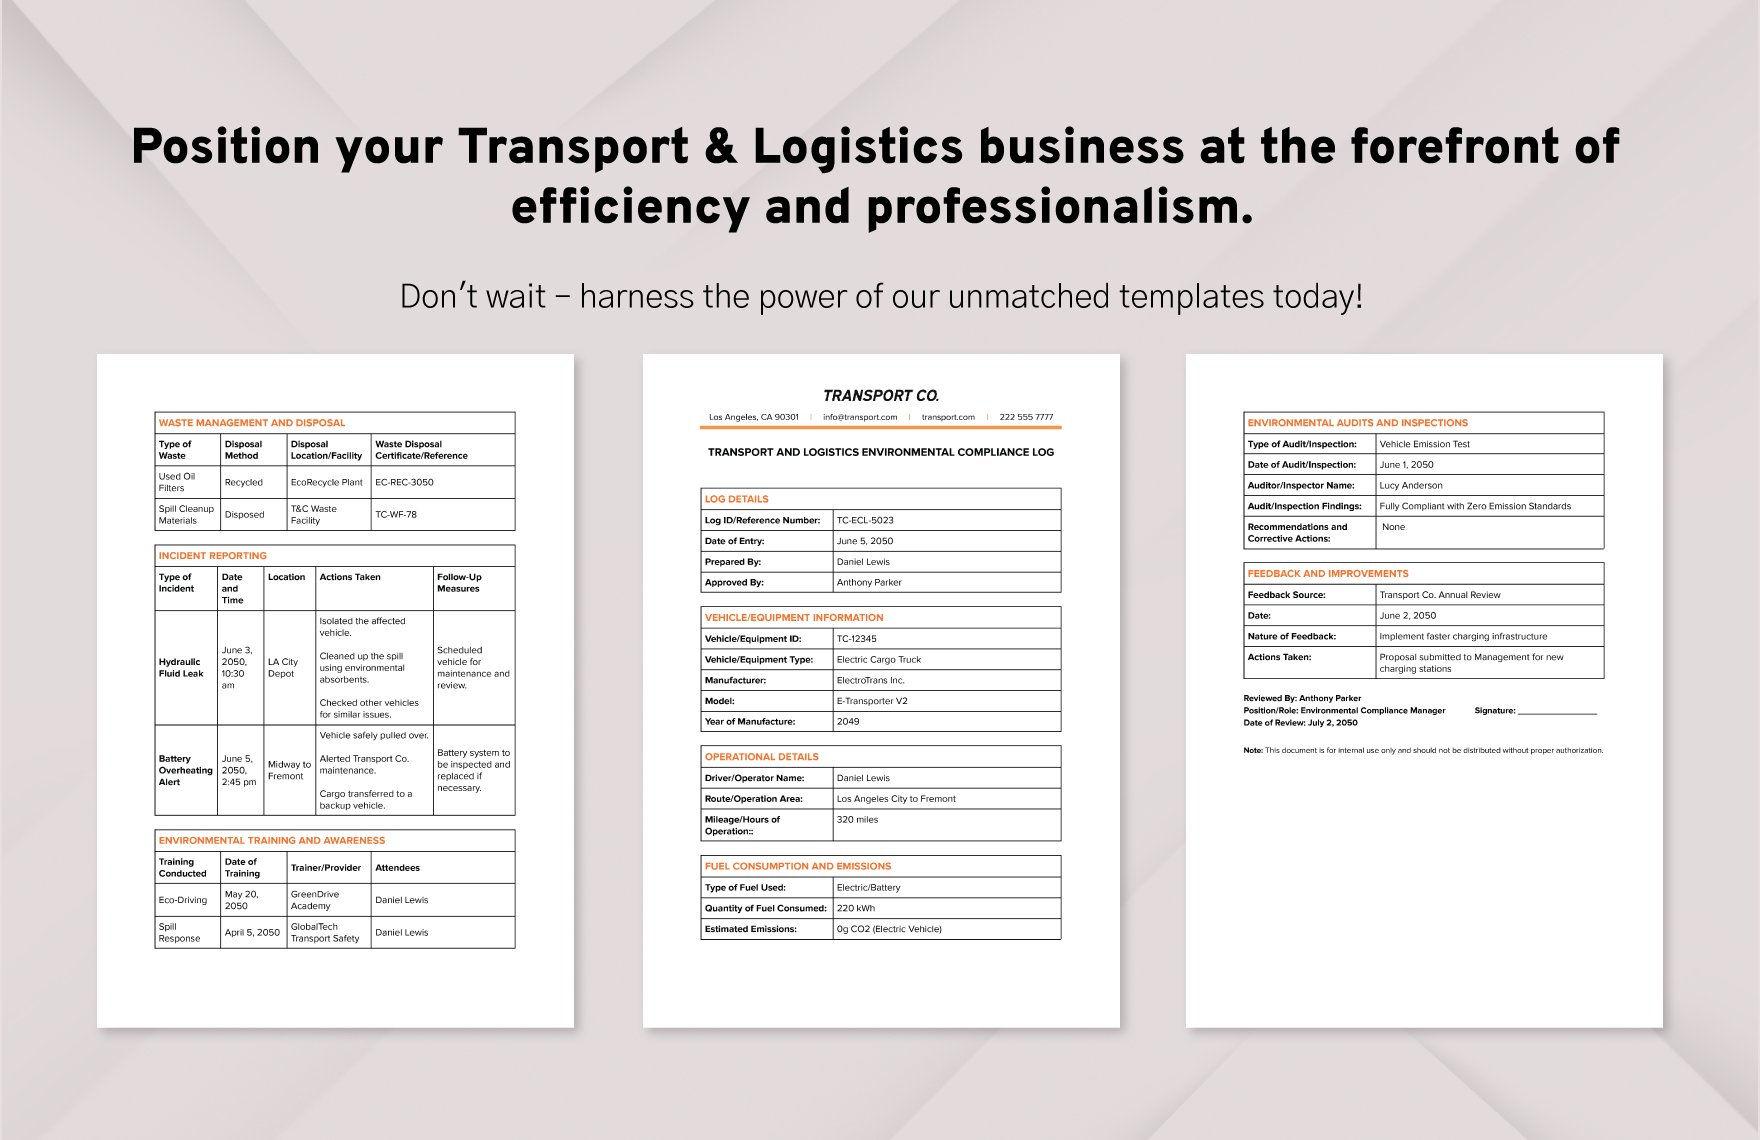 Transport and Logistics Environmental Compliance Log Template